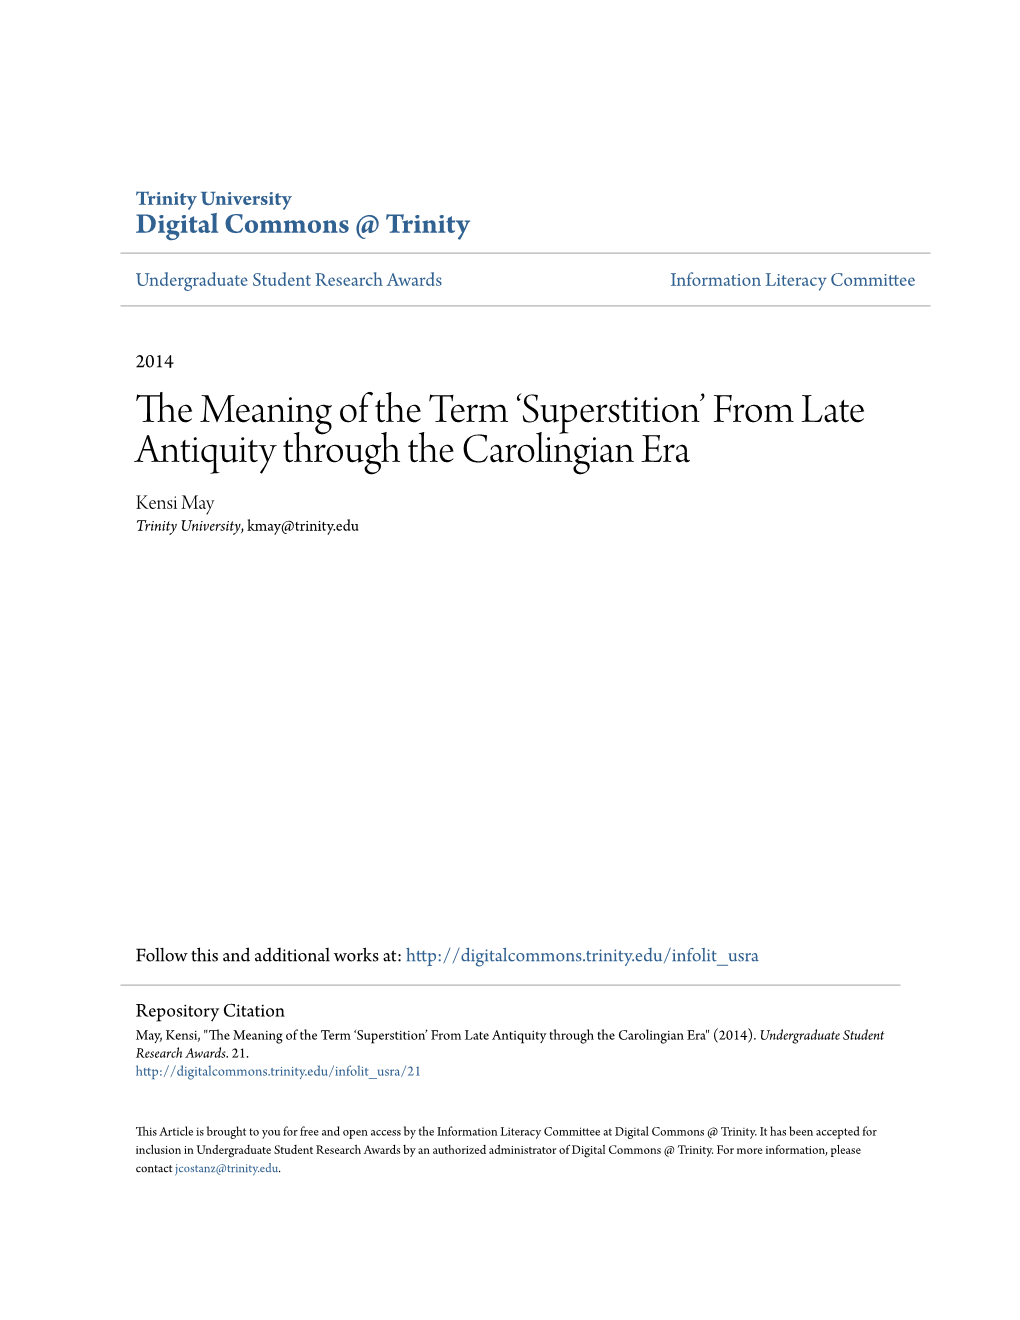 Superstition’ from Late Antiquity Through the Carolingian Era Kensi May Trinity University, Kmay@Trinity.Edu